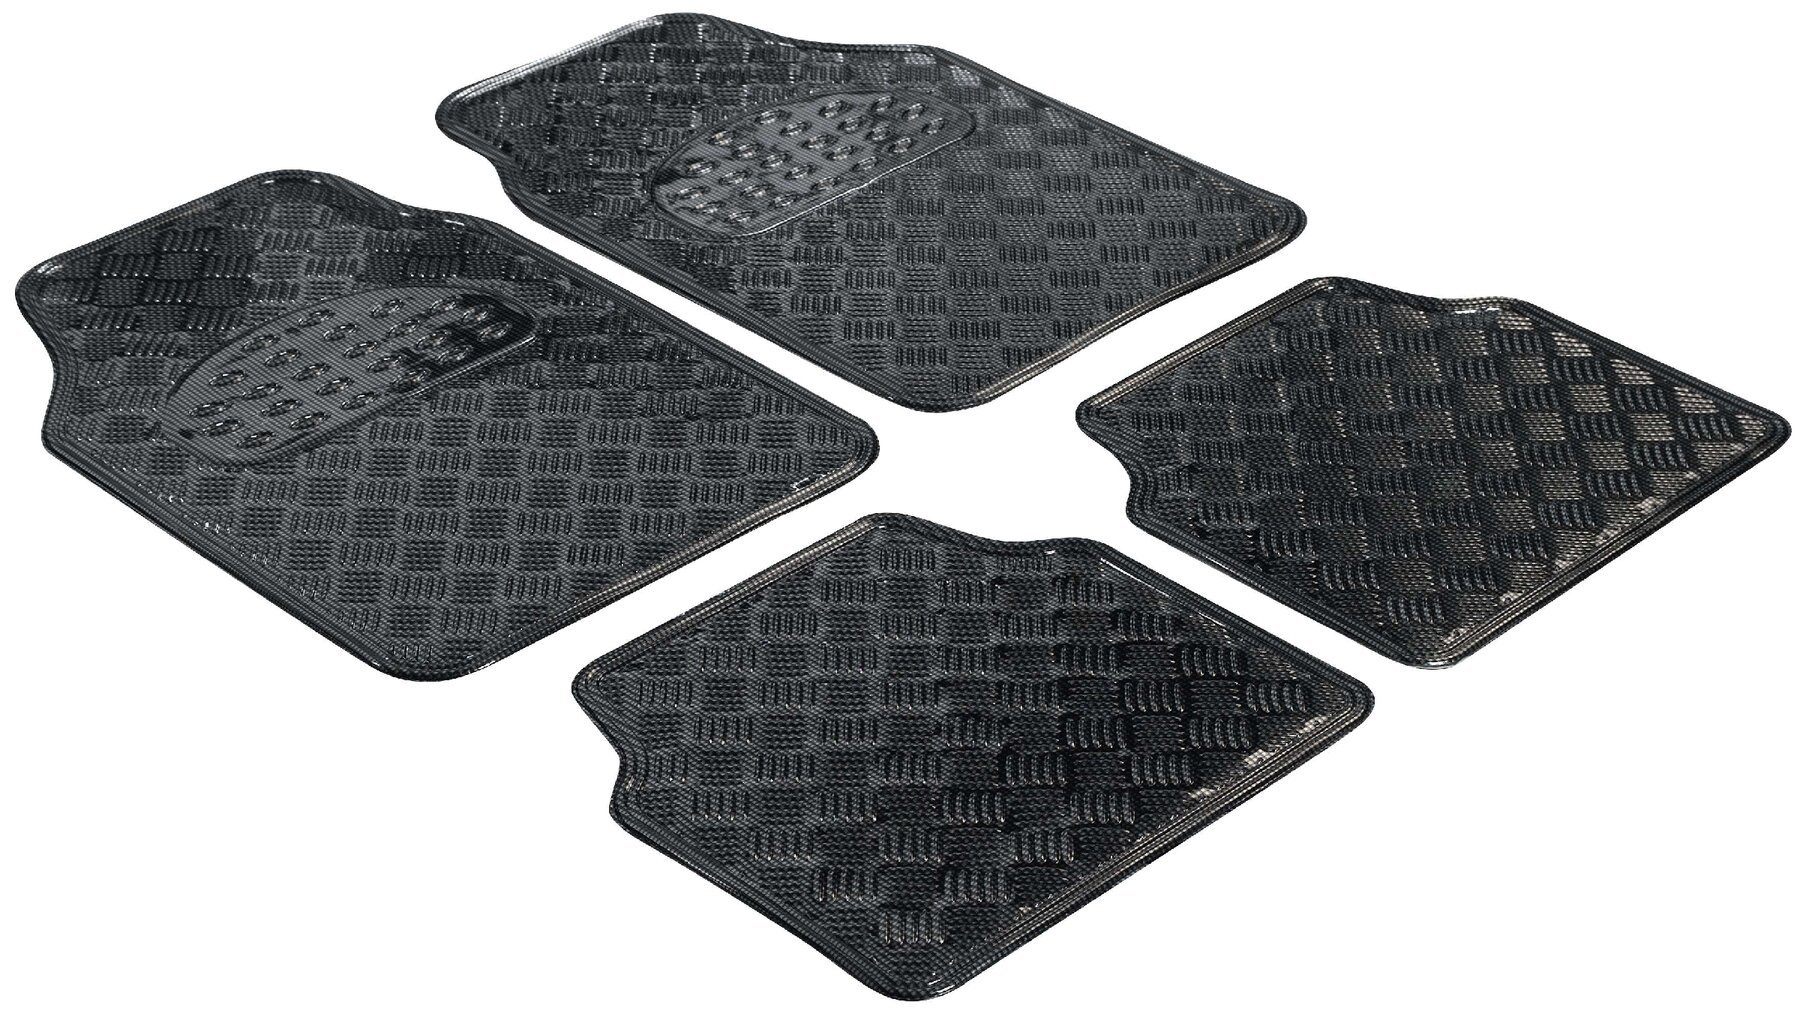 Car Rubber matss metallic checker plate look carbon maxi